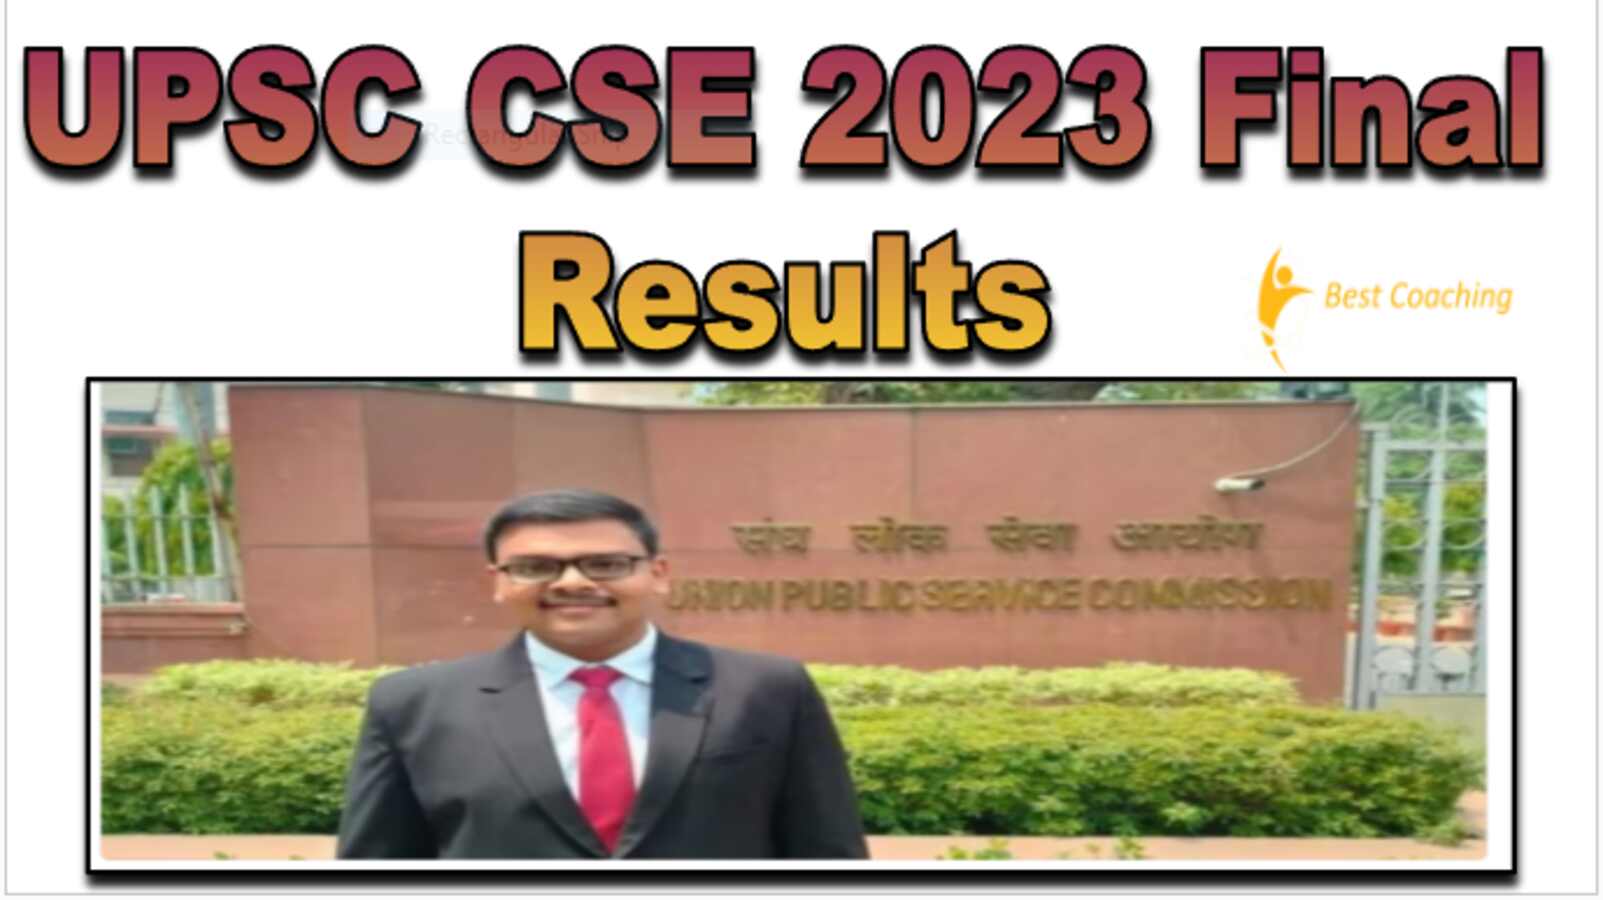 UPSC CSE 2023 Final Results